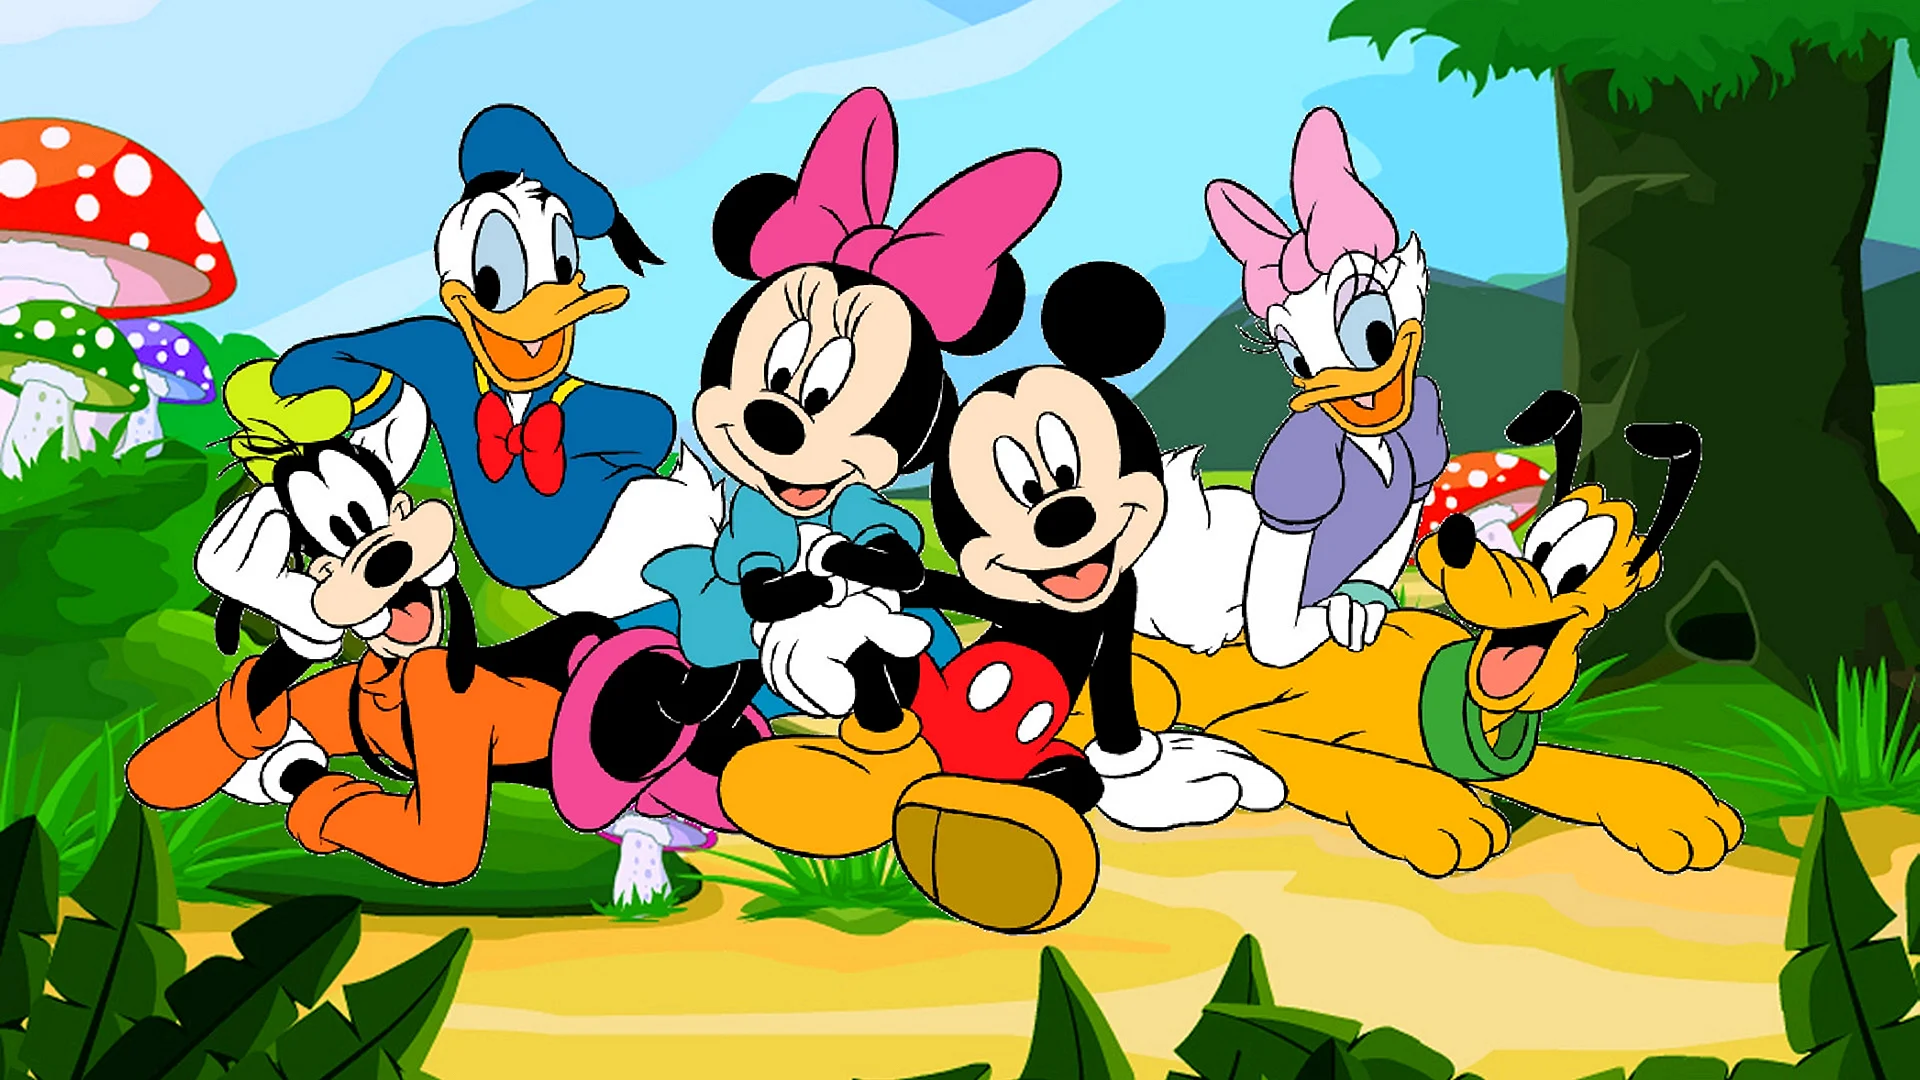 Disney Cartoon Wallpaper